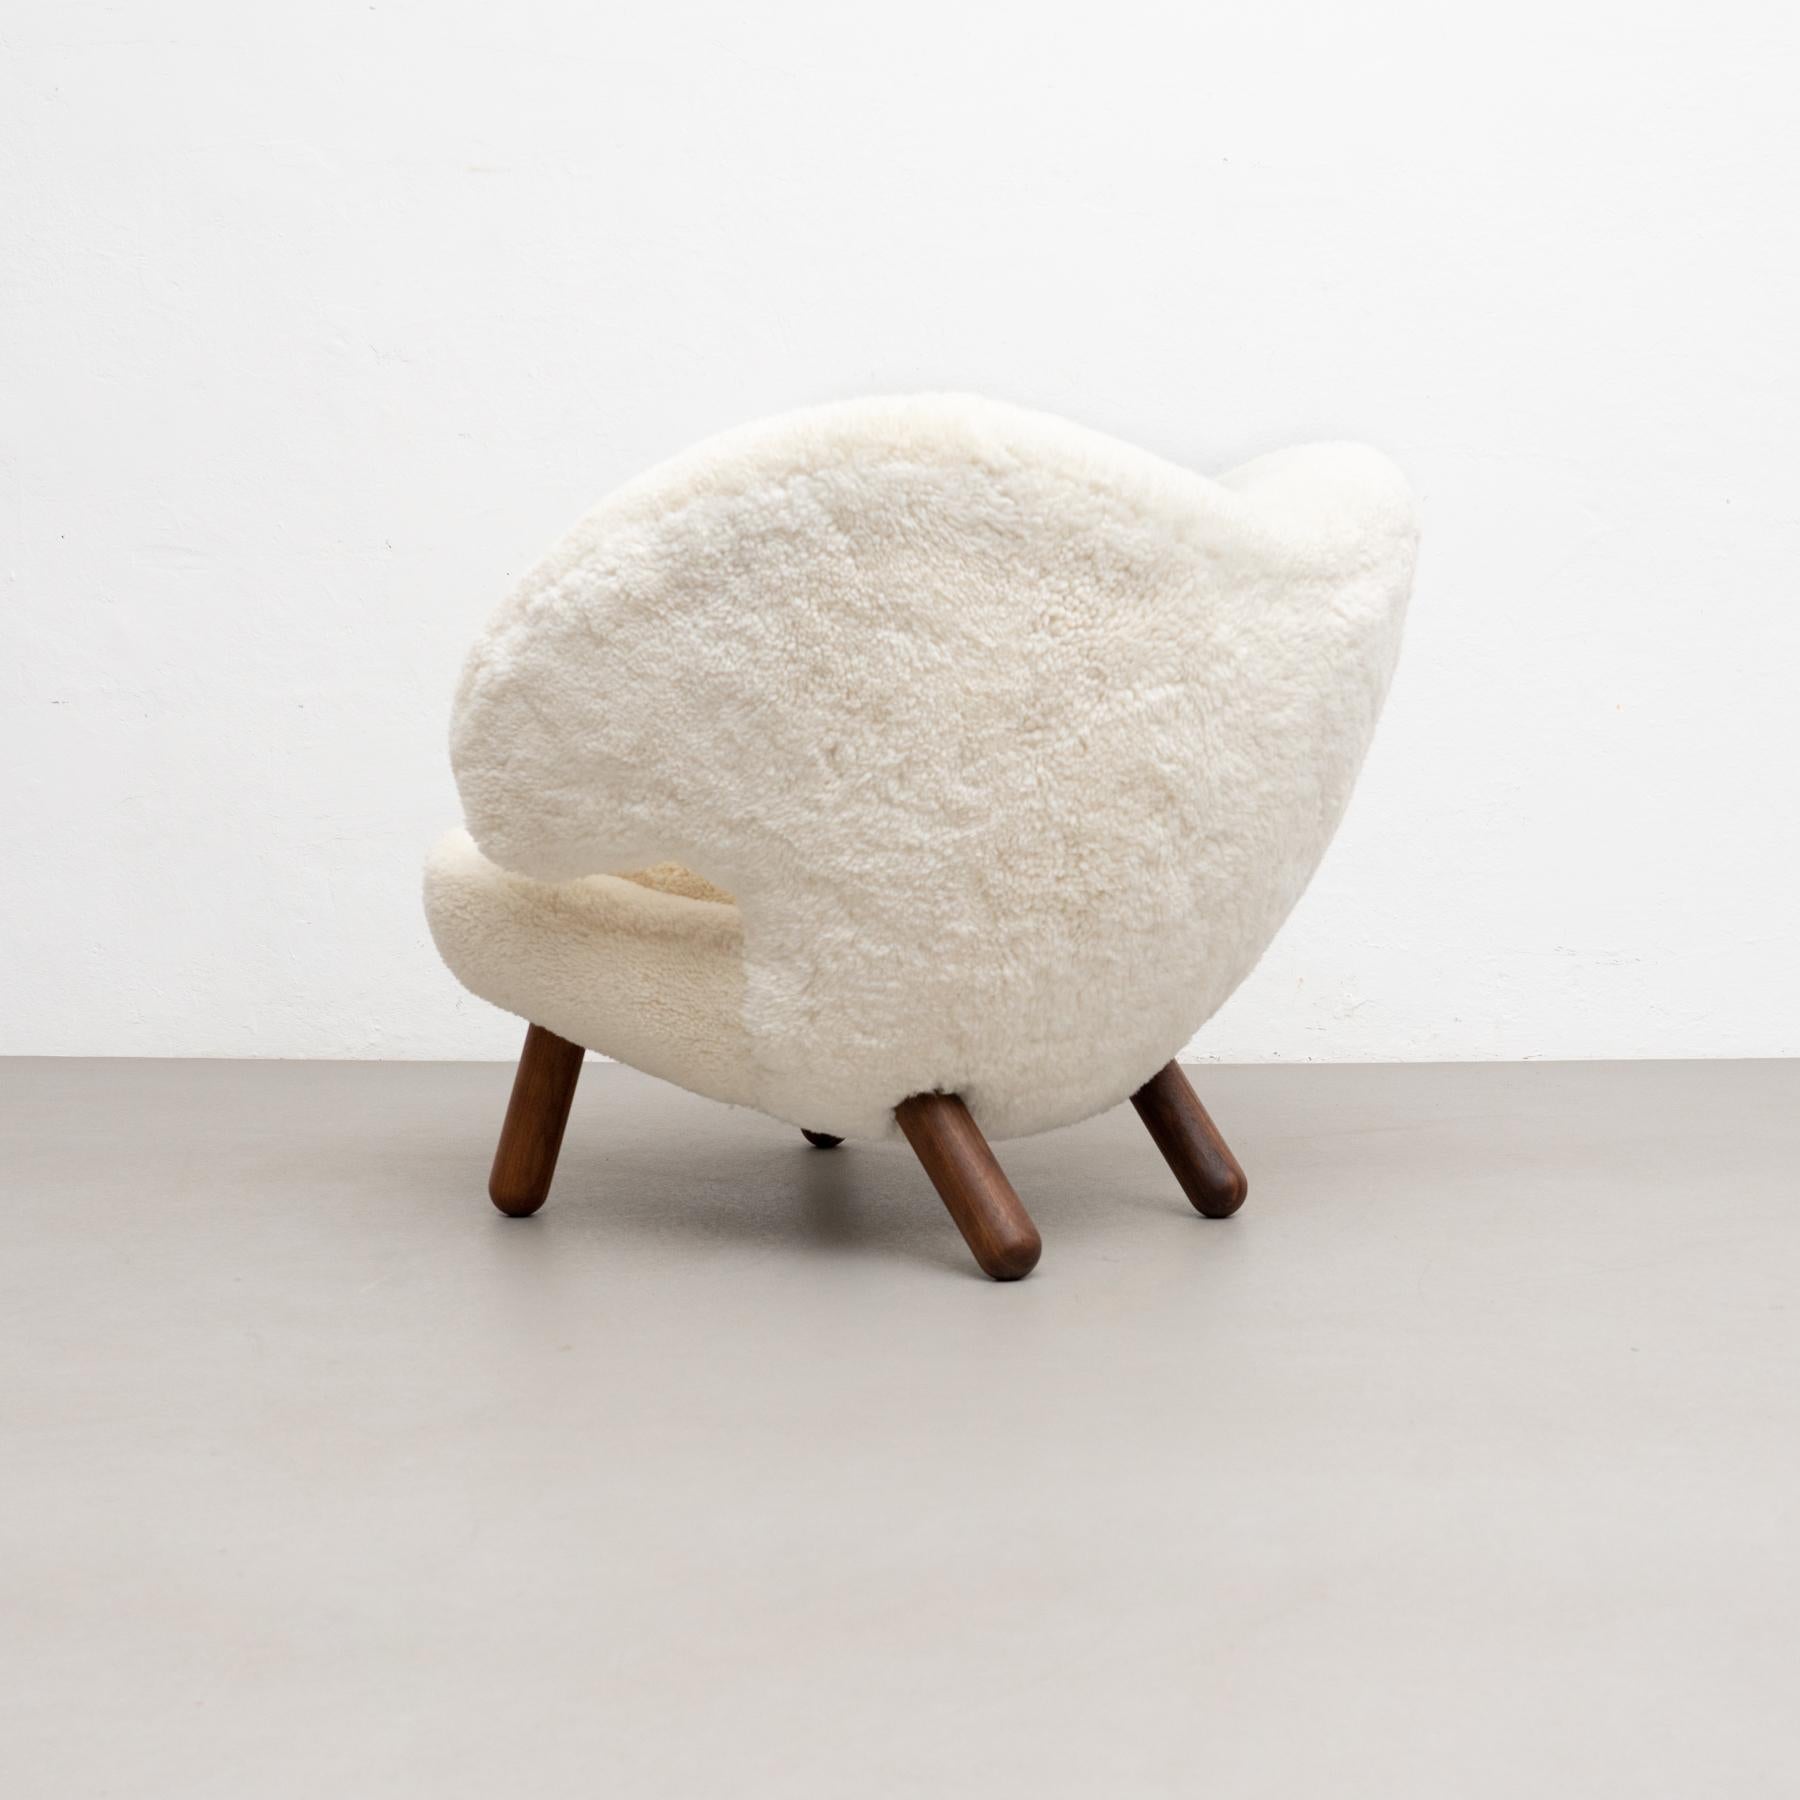 Finn Juhl Pelican Chair Upholstered in Offwhite Sheepskin (Chaise Pélican recouverte de peau de mouton blanc cassé) en vente 1